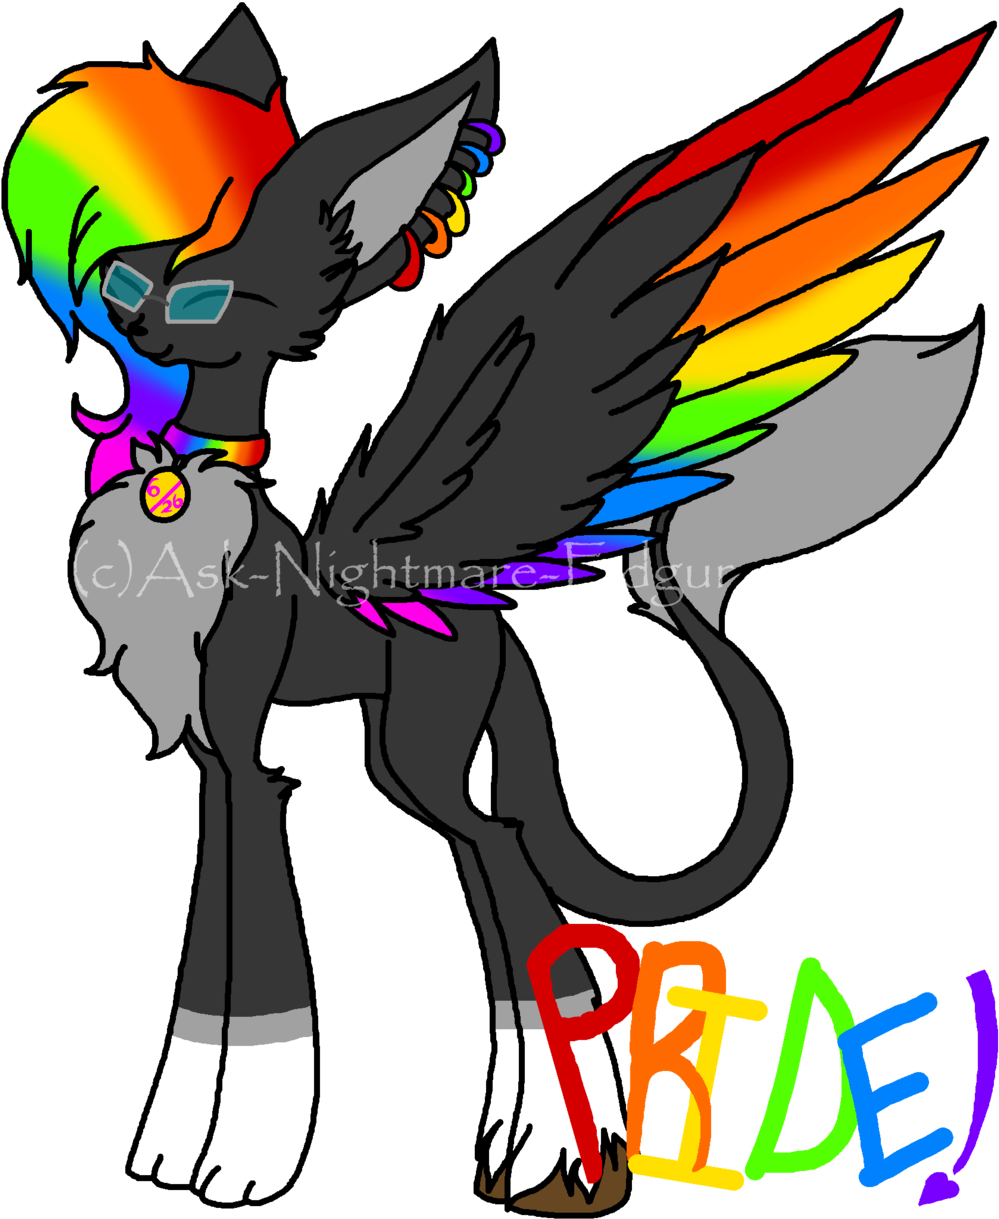 Gay Pride By Ask Nightmare Edgur - Gay Pride (1024x1267)